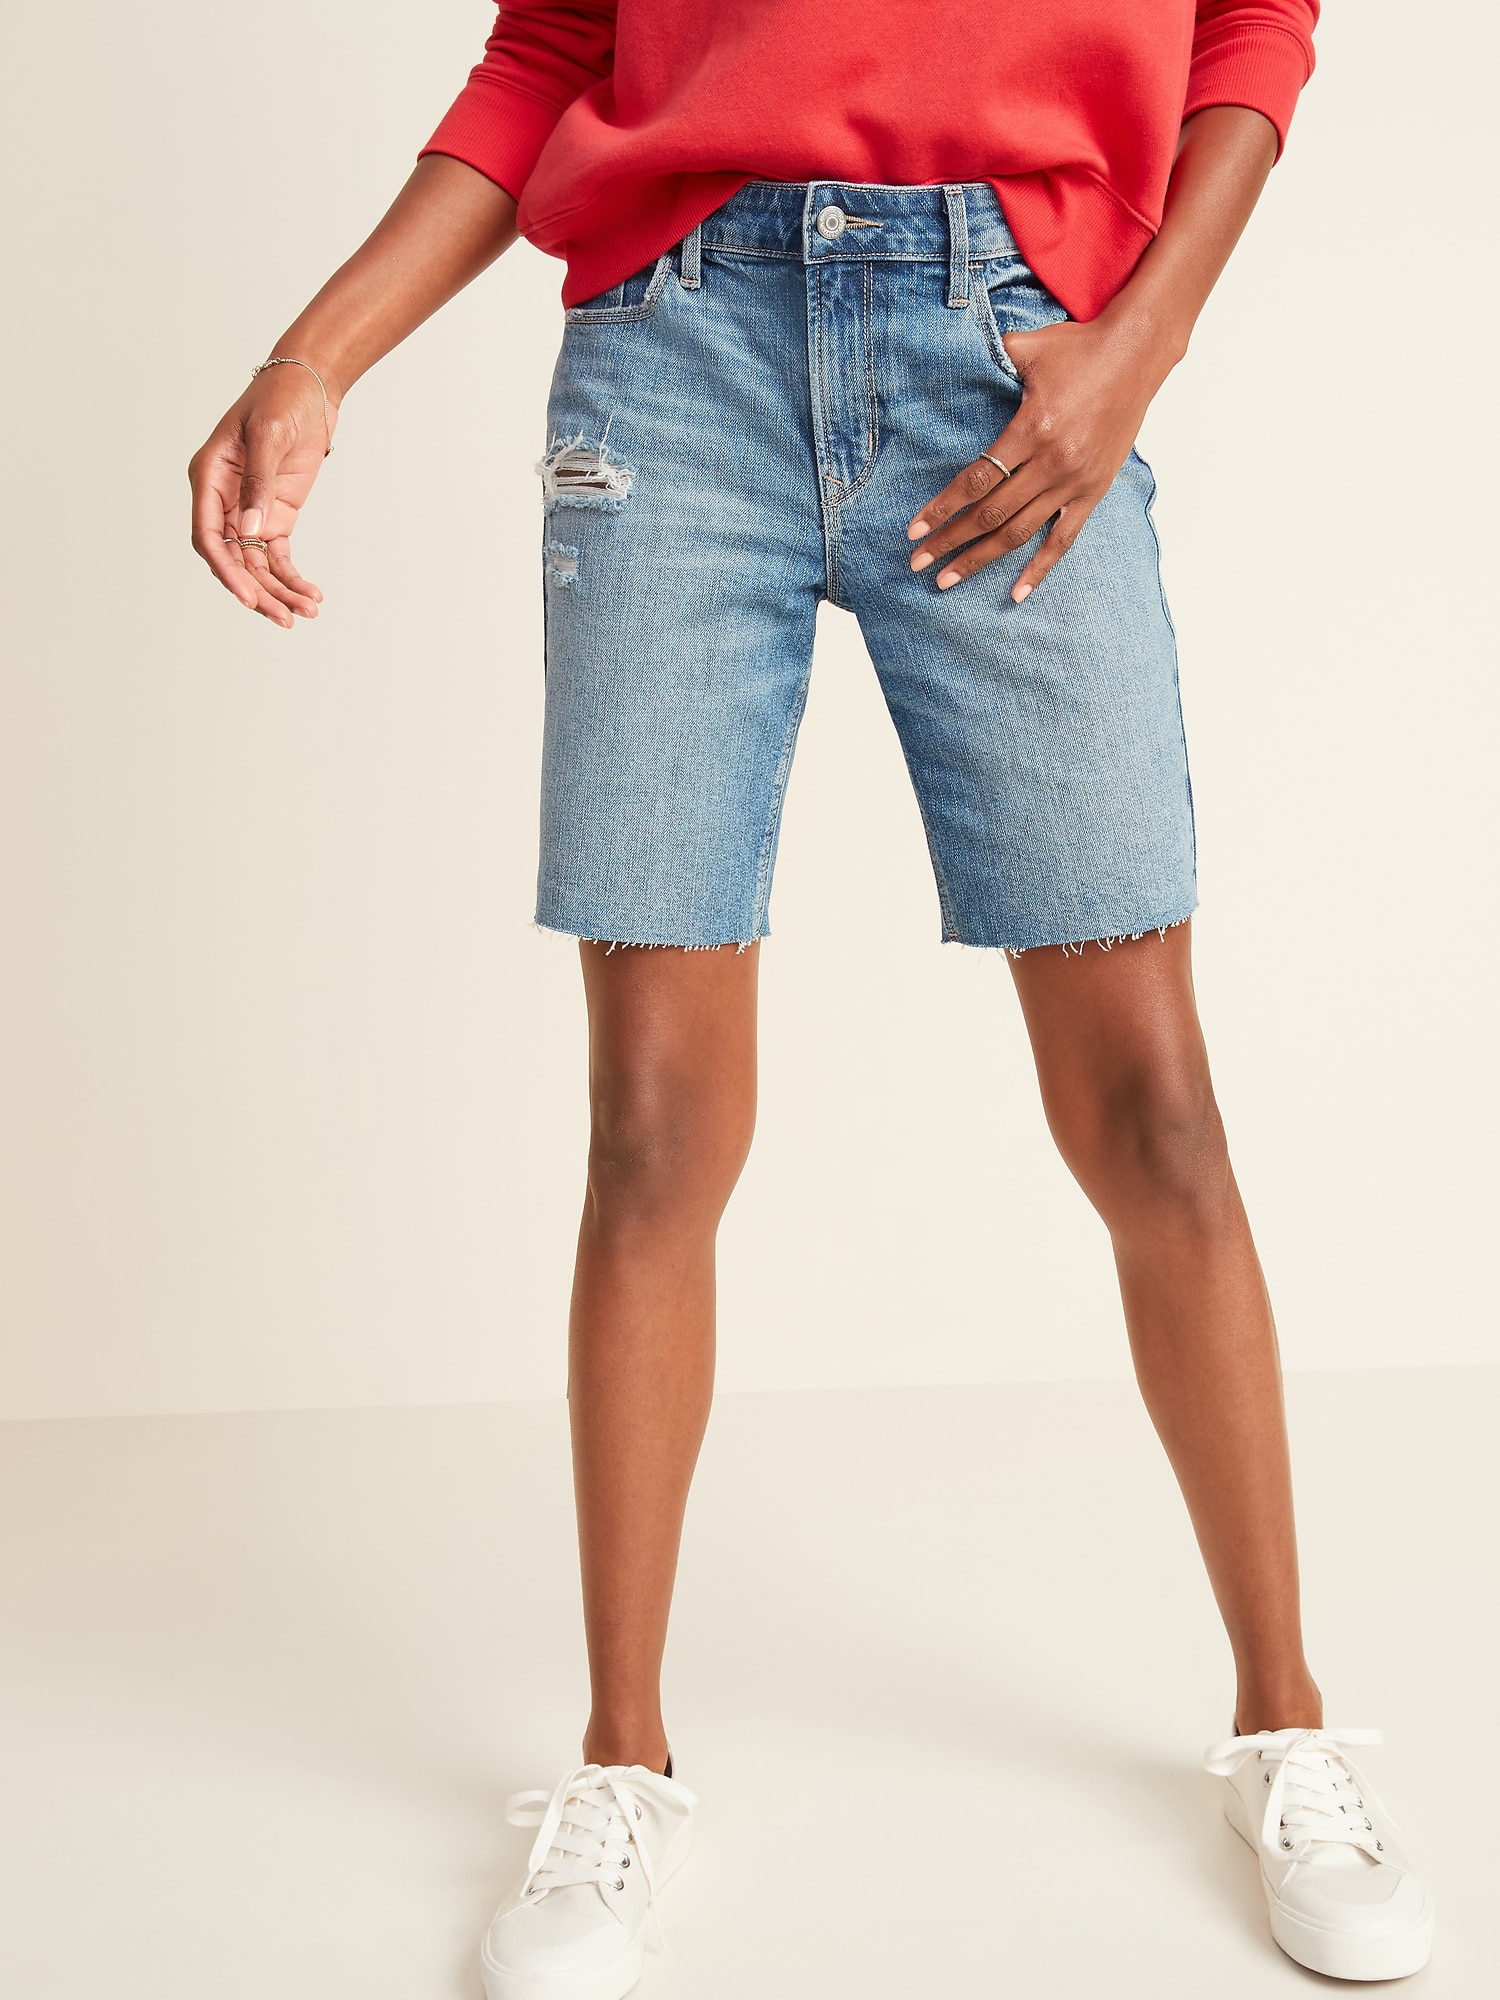 bermuda distressed denim shorts